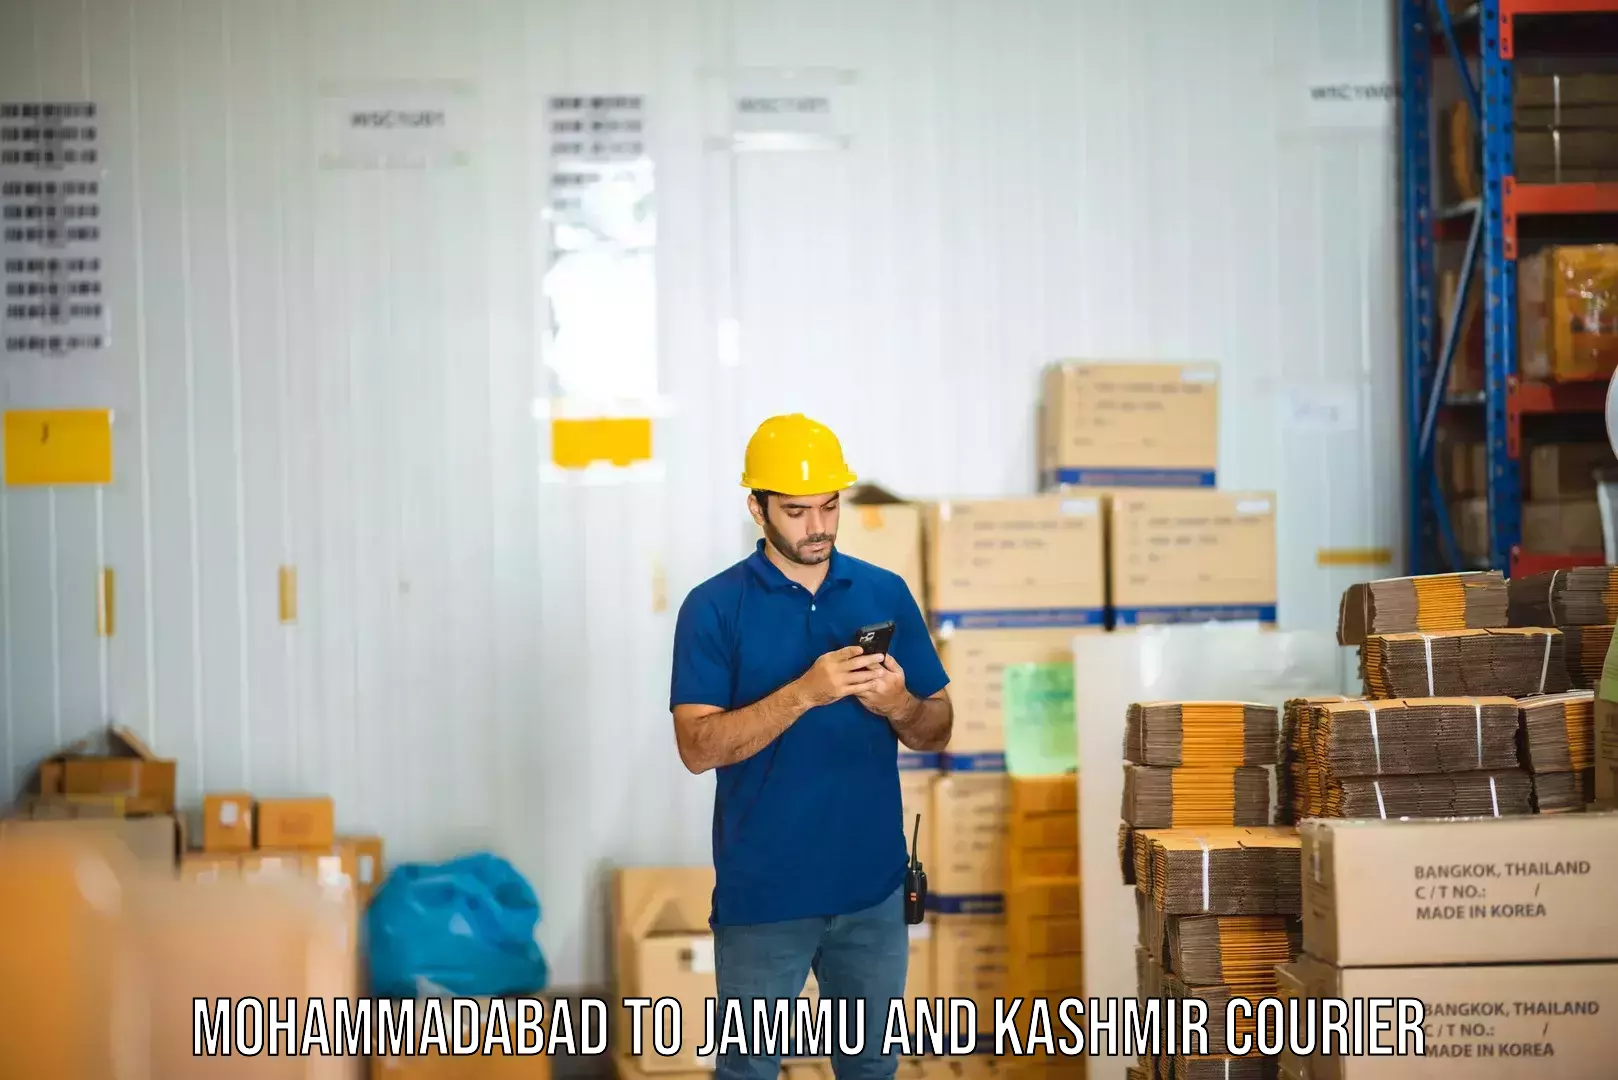 Next-day freight services Mohammadabad to Srinagar Kashmir